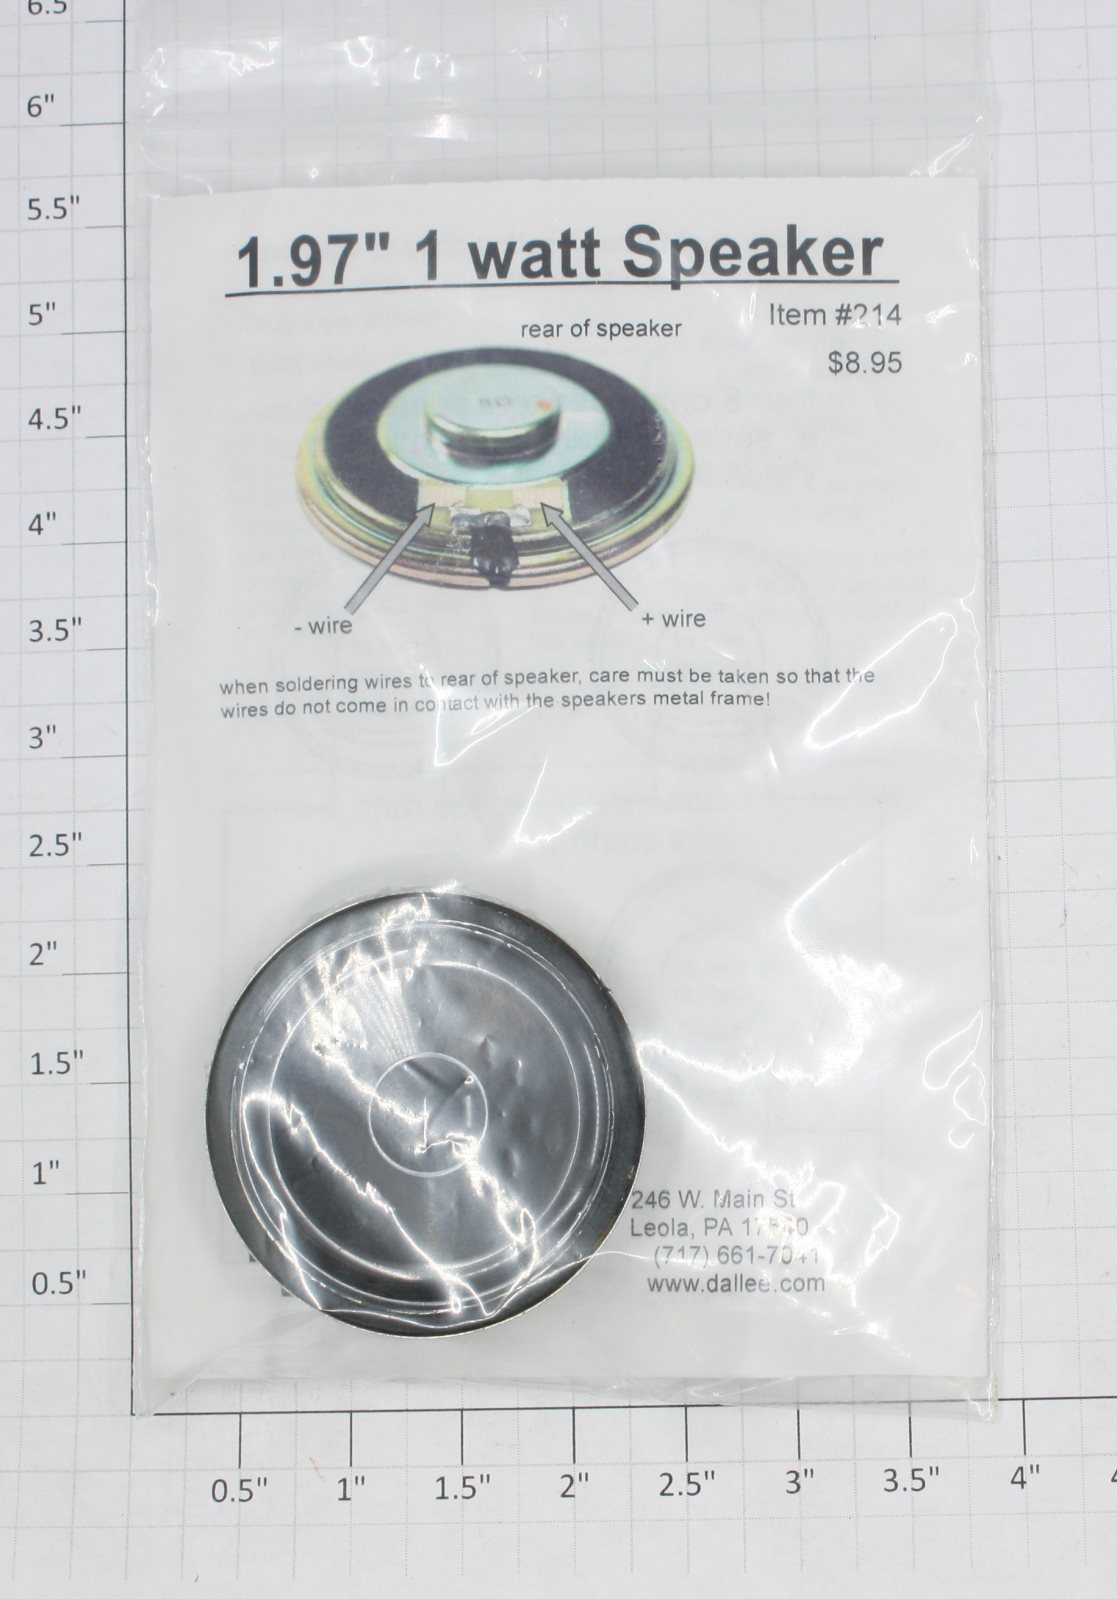 Dallee 214 1.97" 1 Watt Speaker